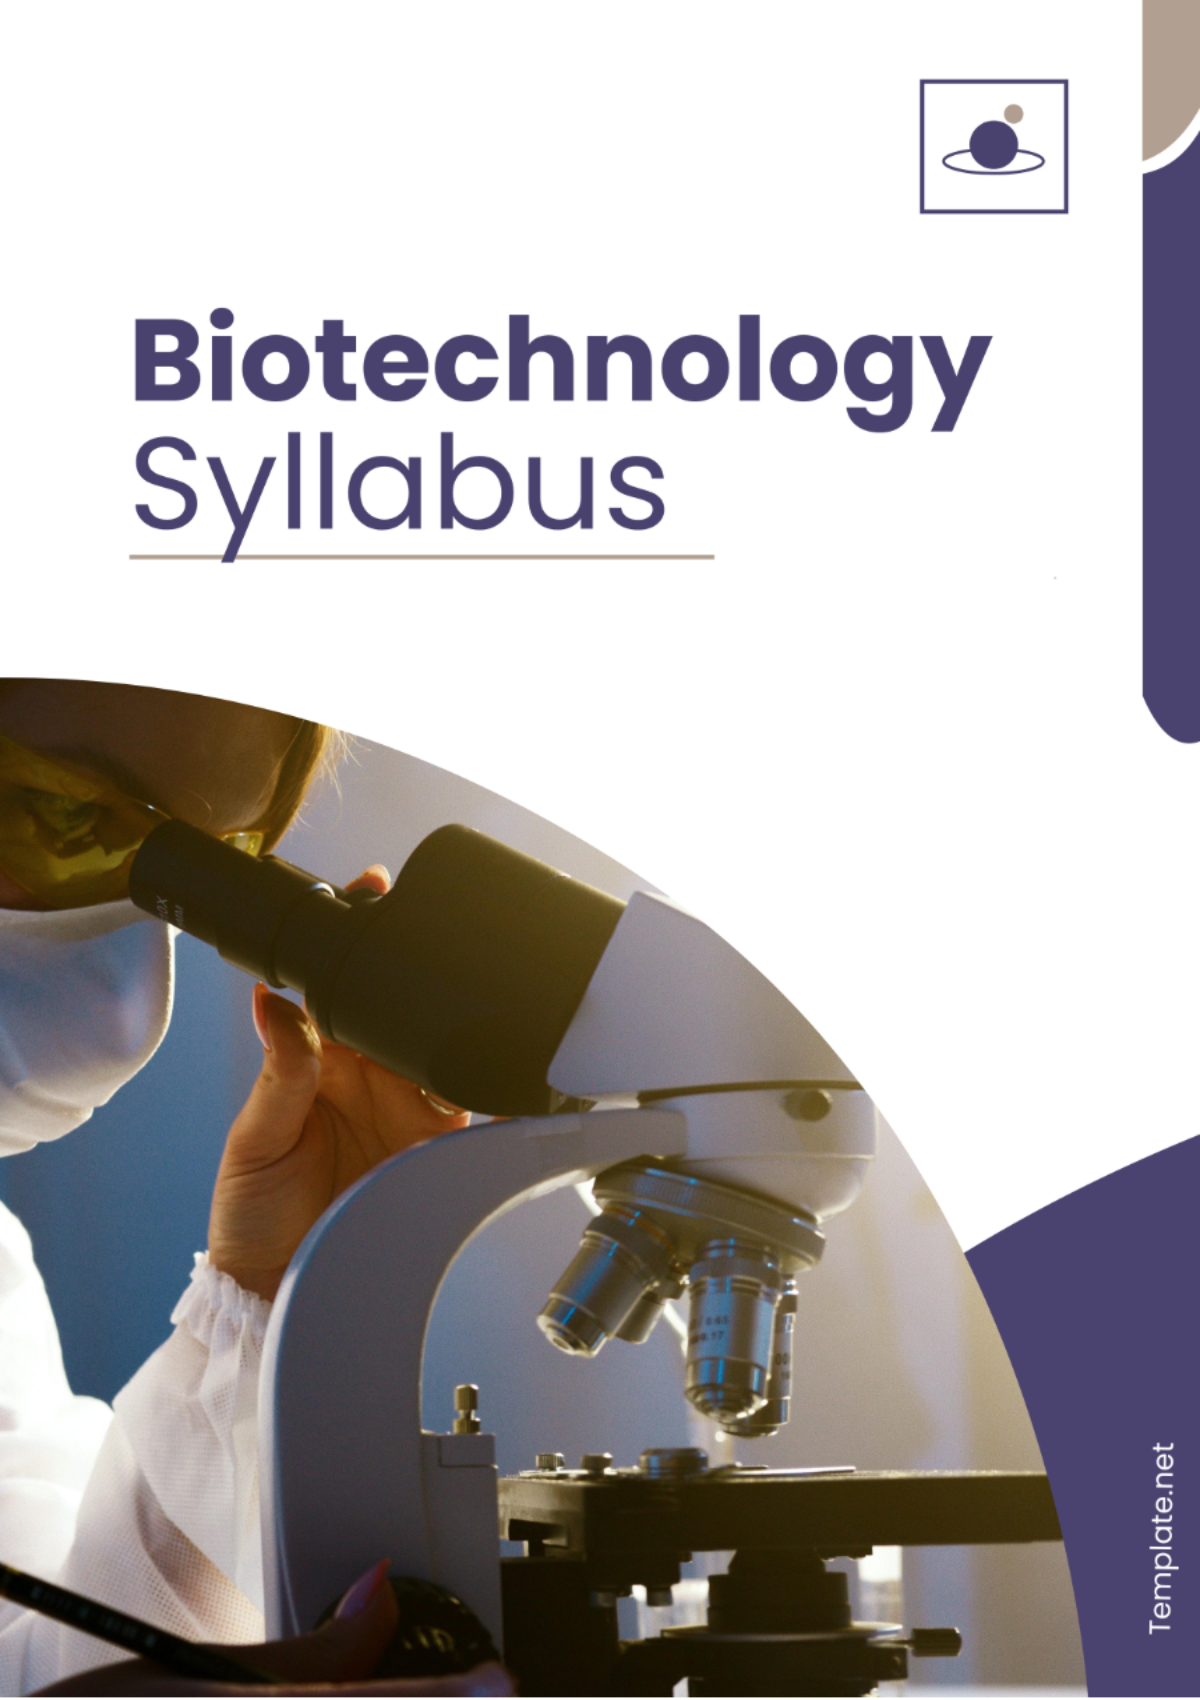 Biotechnology Syllabus Template